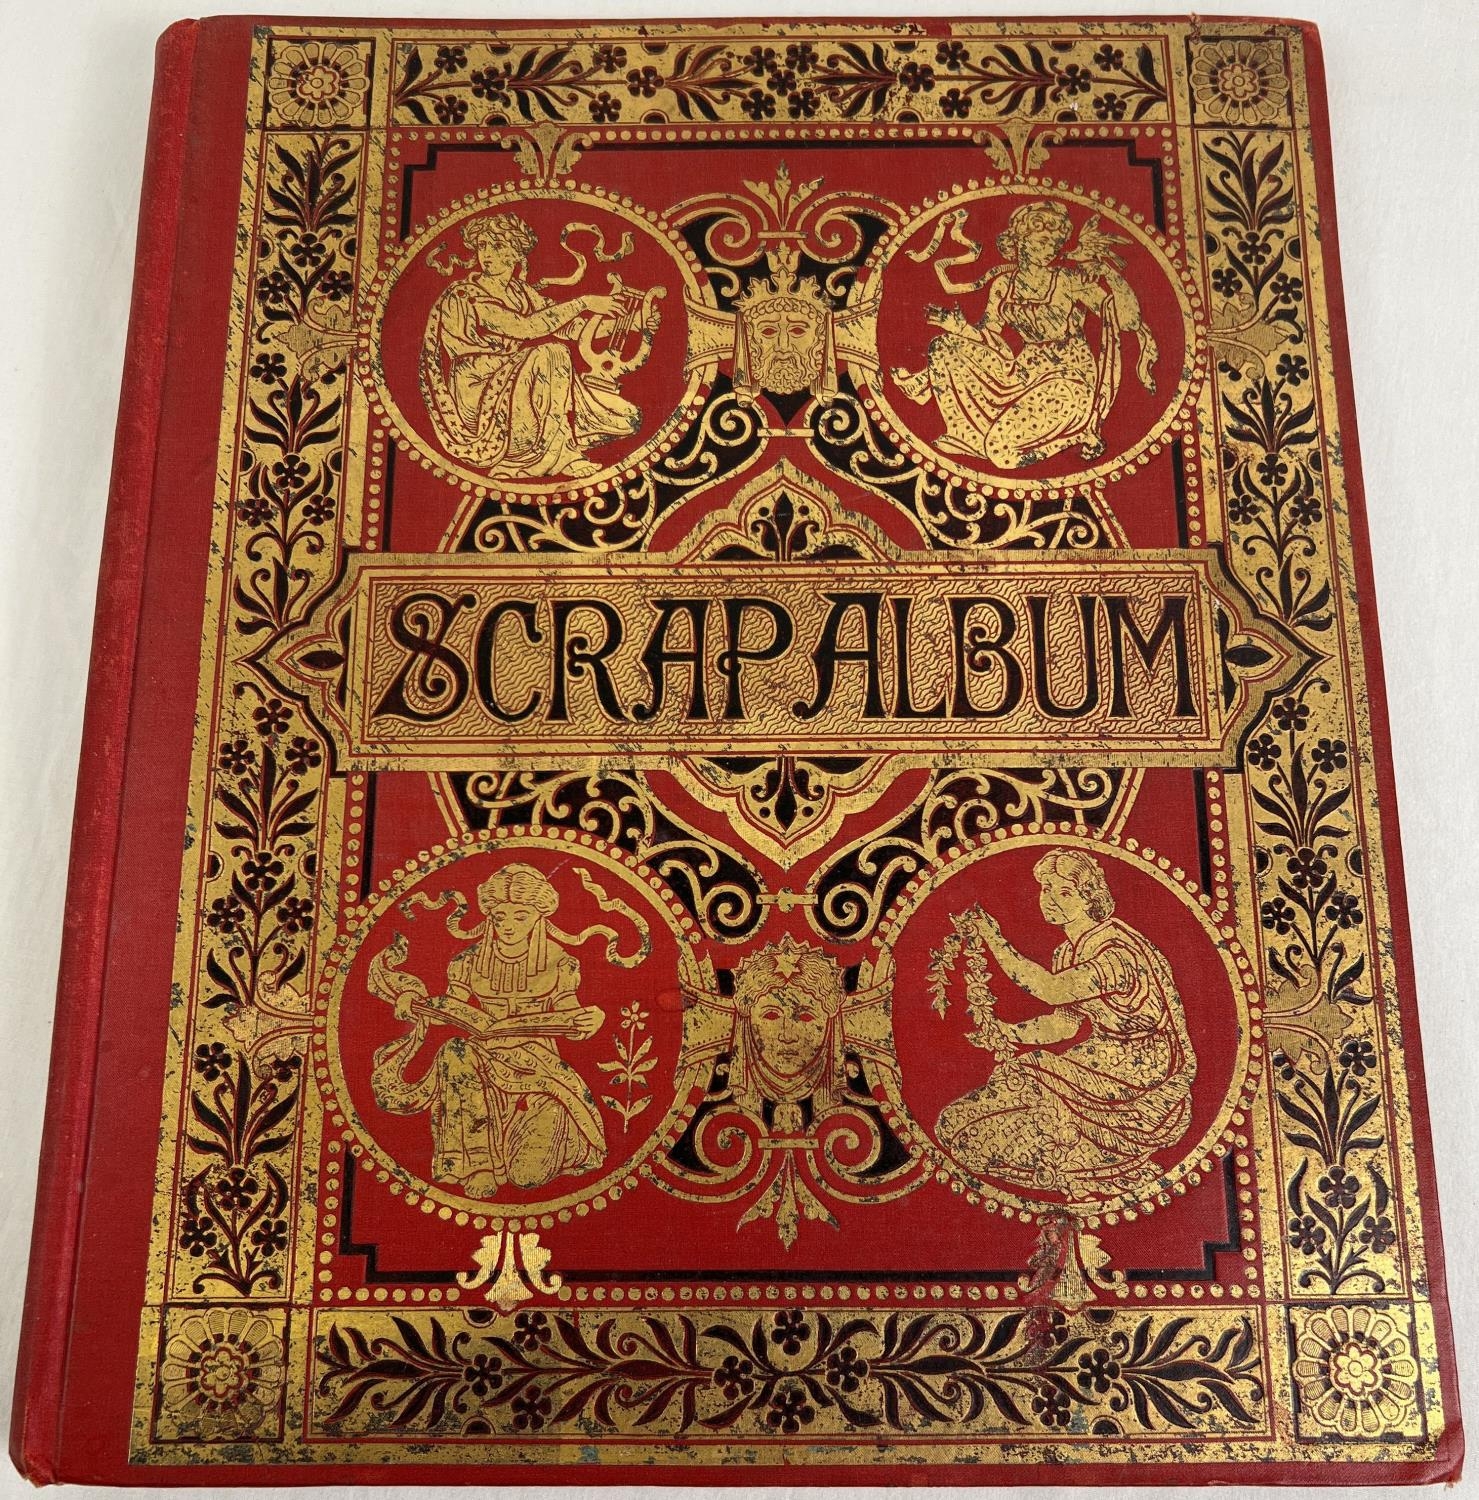 A Victorian red scrap album with decorative gilt design cover, containing assorted scraps &